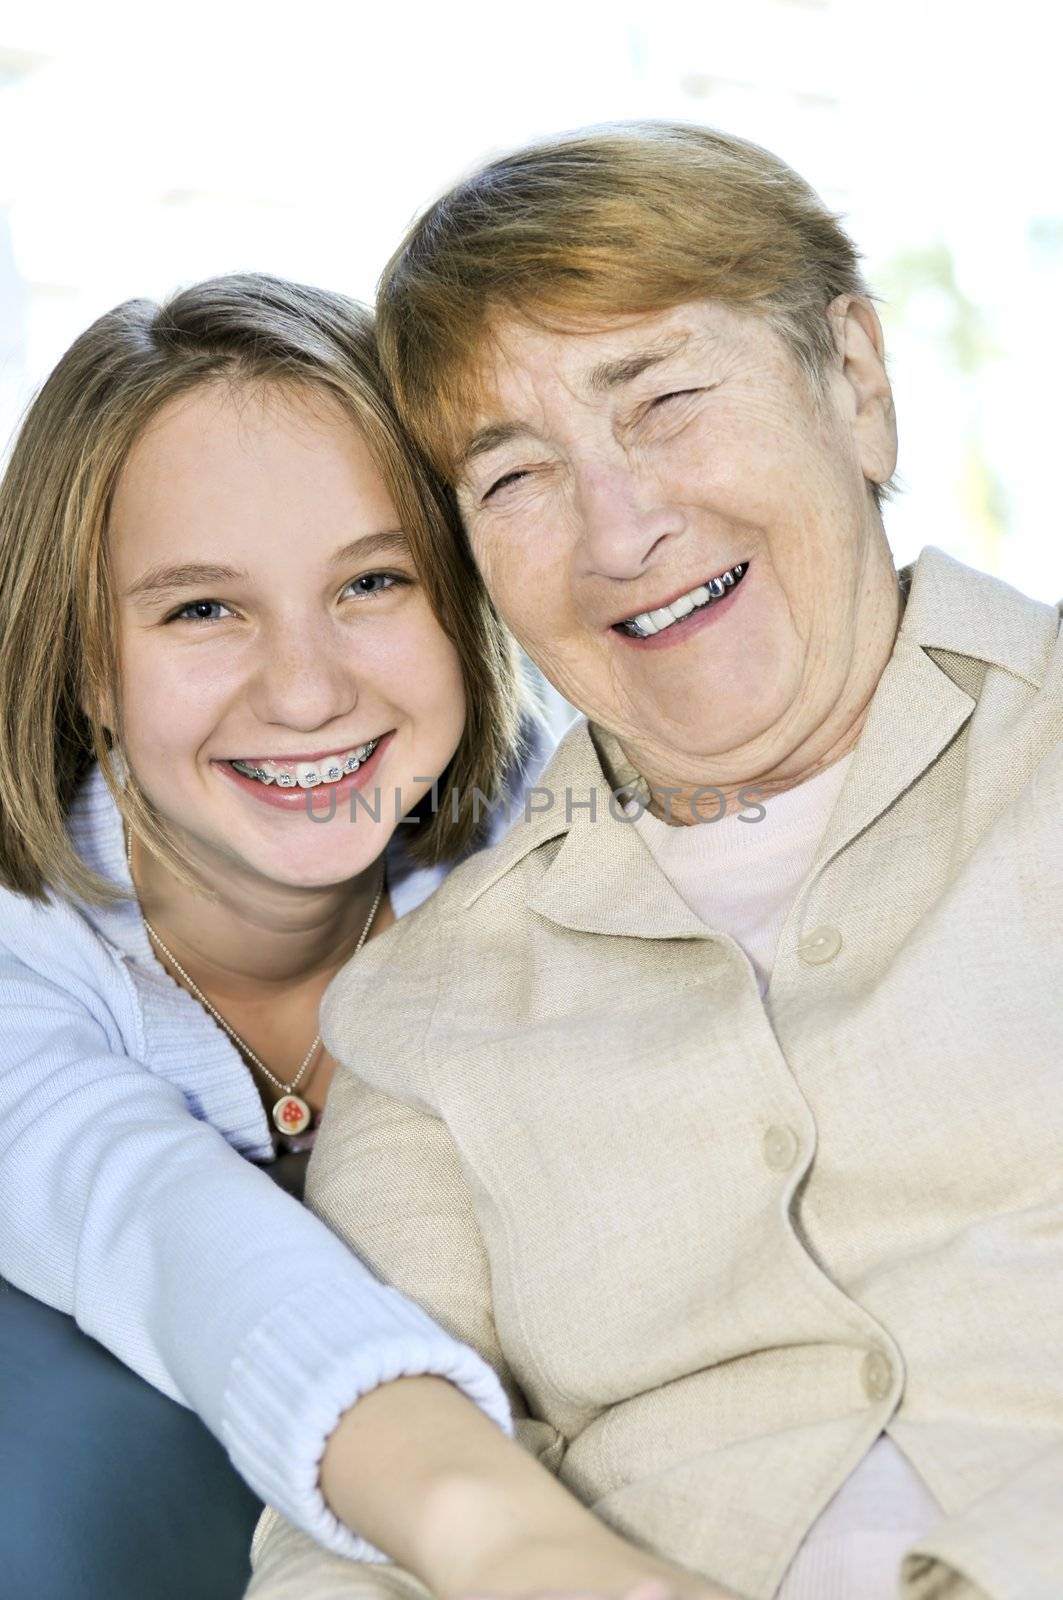 Teen granddaughter hugging grandmother laughing and smiling